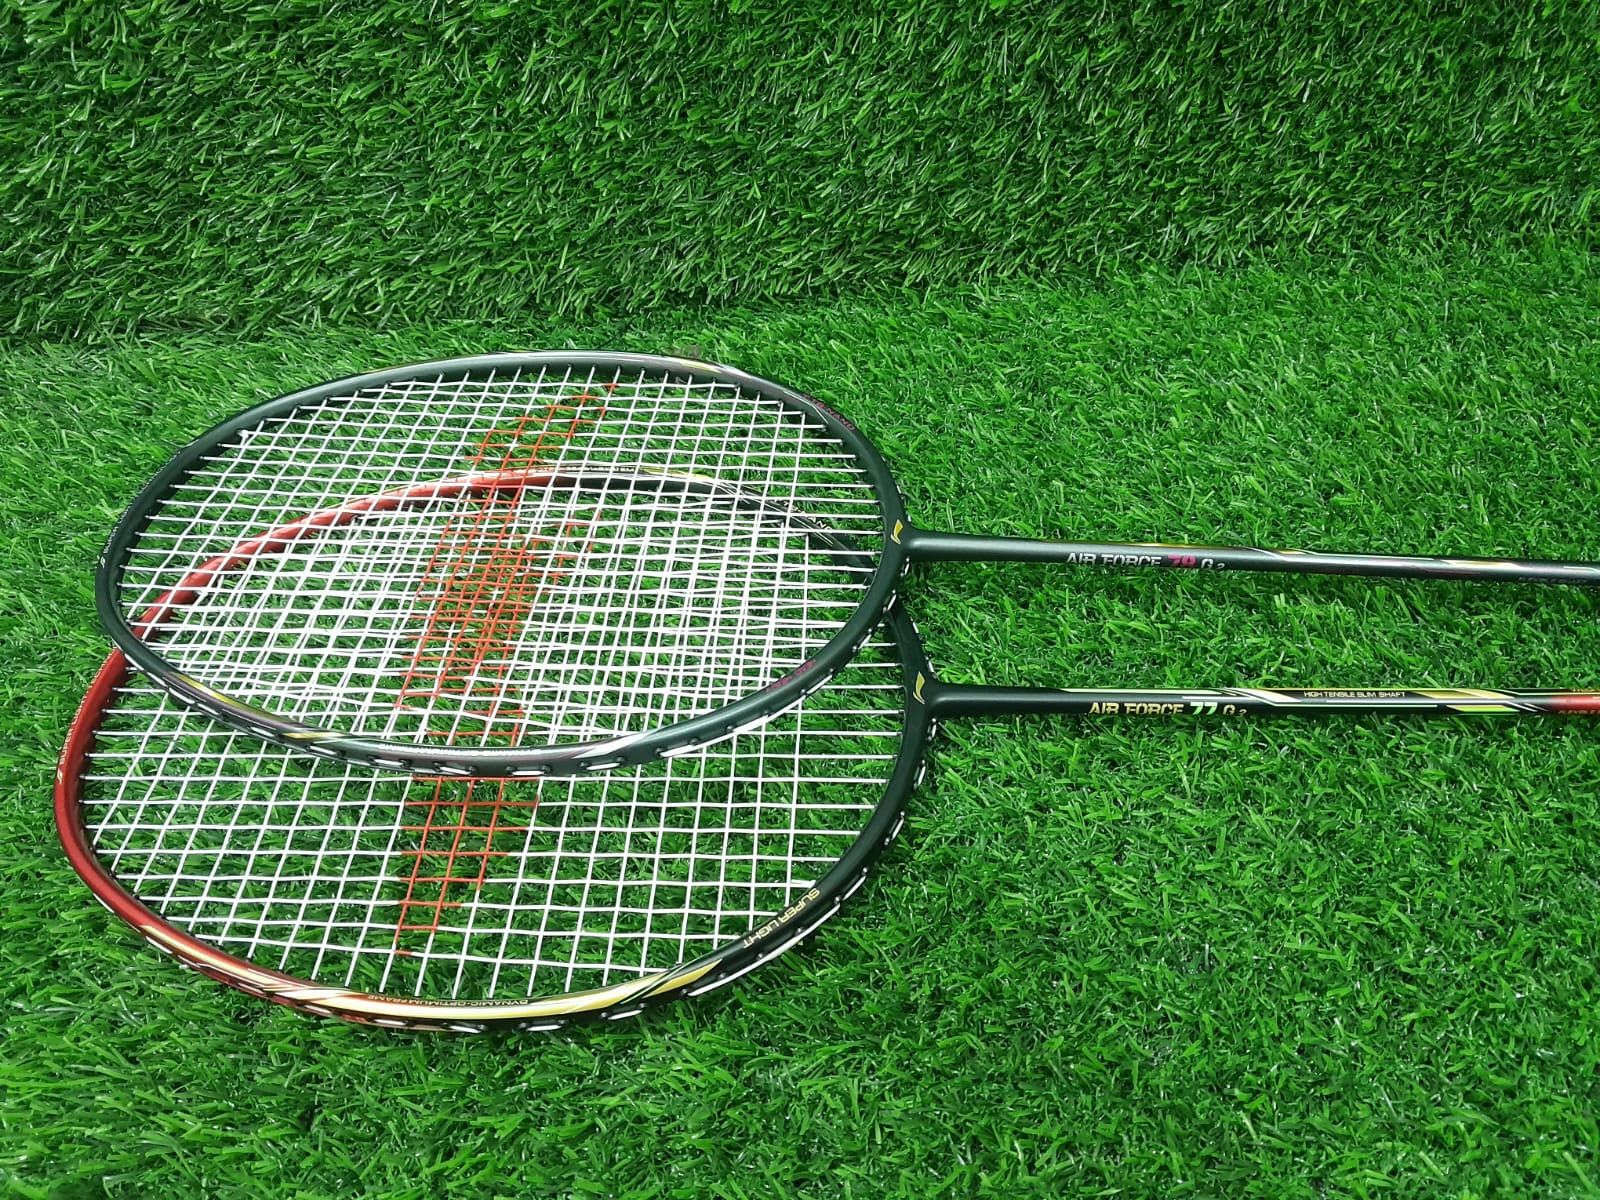 Li Ning Air Force 78 G2 Badminton Racket